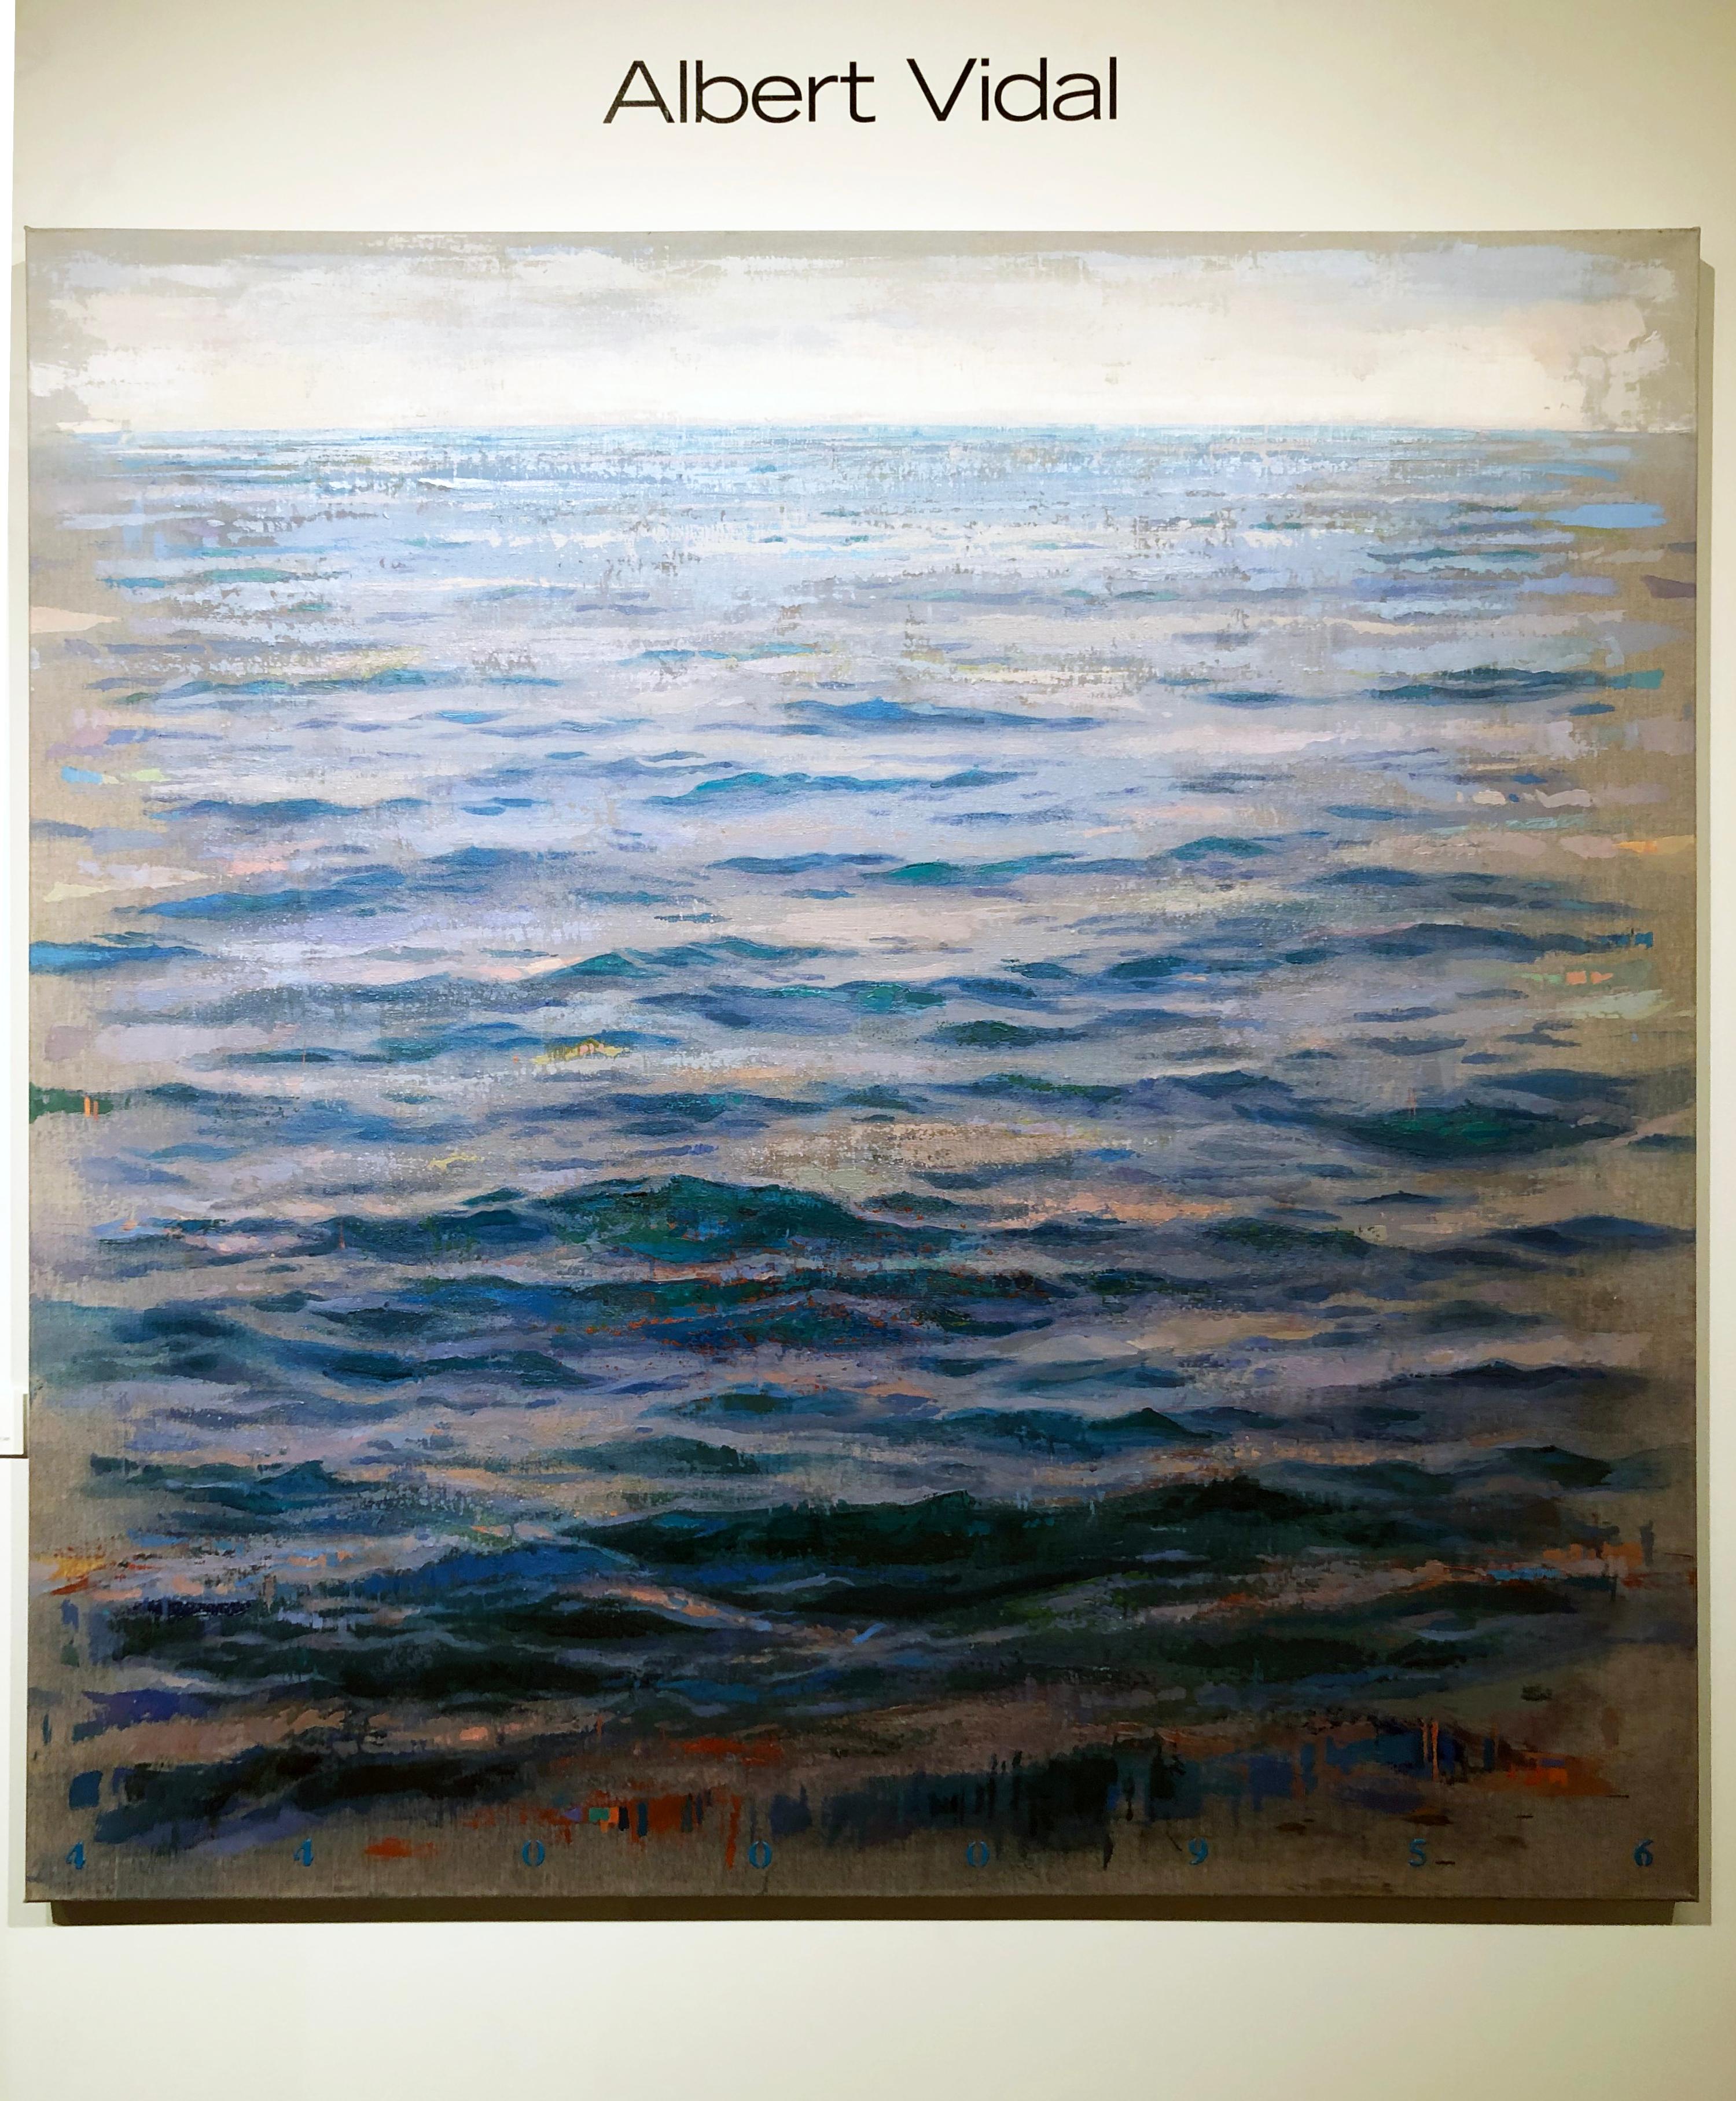 Sea Blue - Großes Ölgemälde des Meeres des spanischen Malers Albert Vidal – Painting von Albert Vidal Moreno